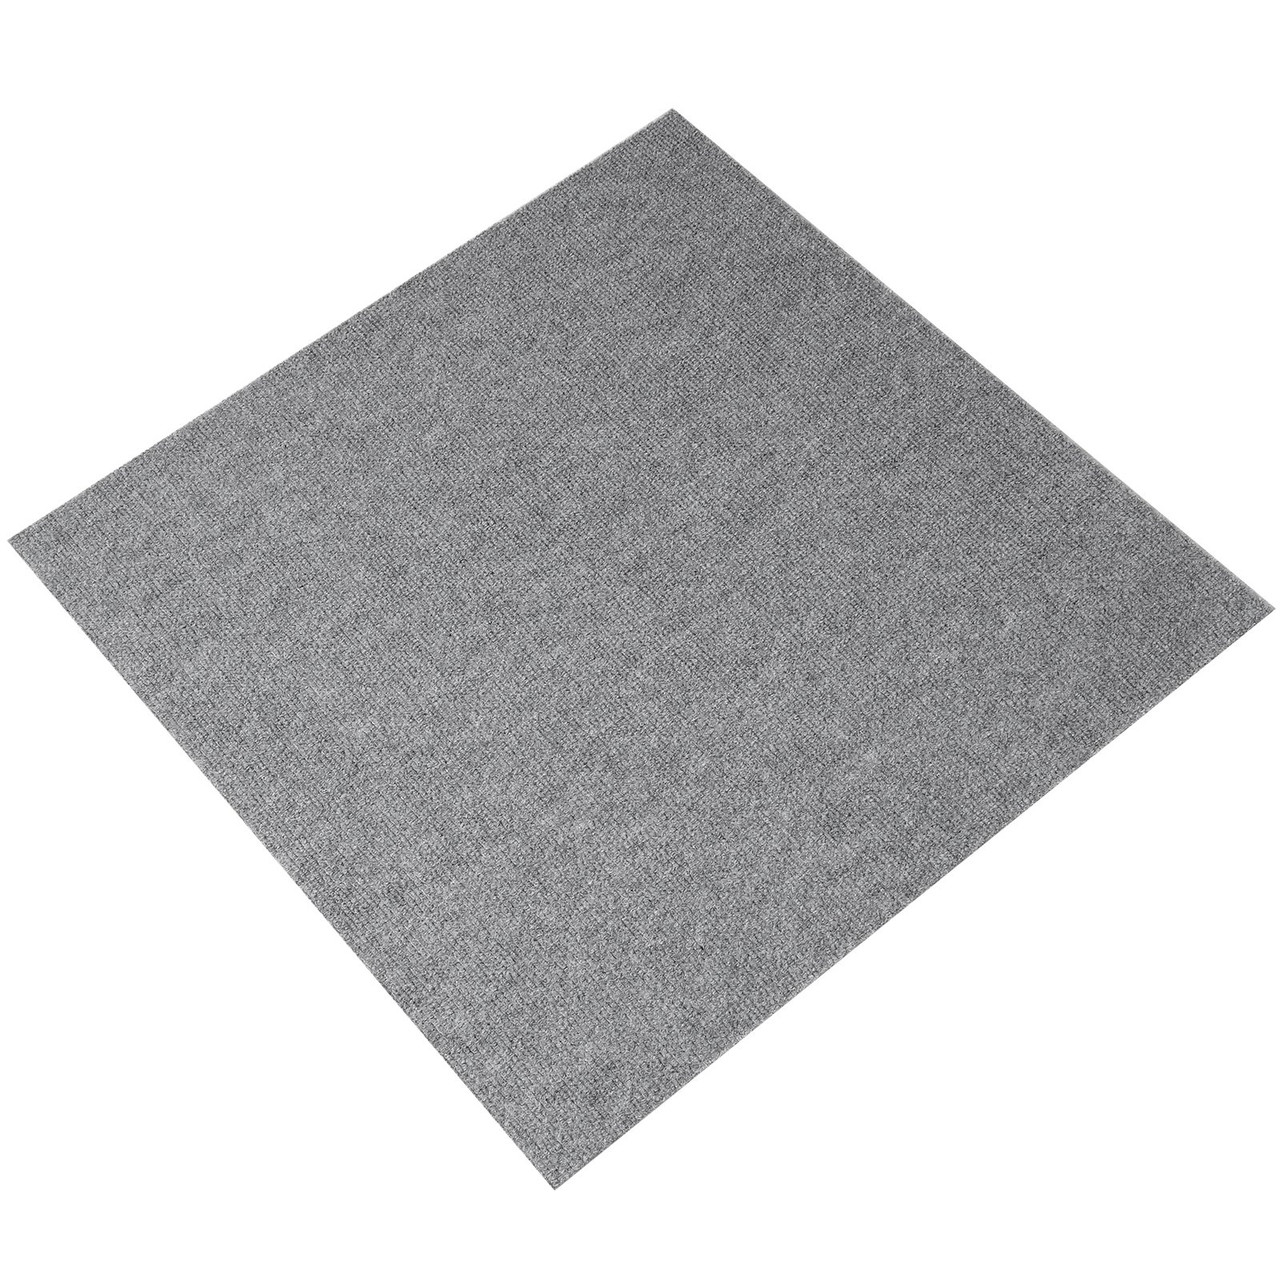 VEVOR Carpet Tiles Peel and Stick, 24” x 24” Squares Self Adhesive Carpet Floor Tile, Soft Padded Carpet Tiles, Easy Install DIY for Bedroom Living Room Indoor Outdoor (9Tiles, Light Gray)